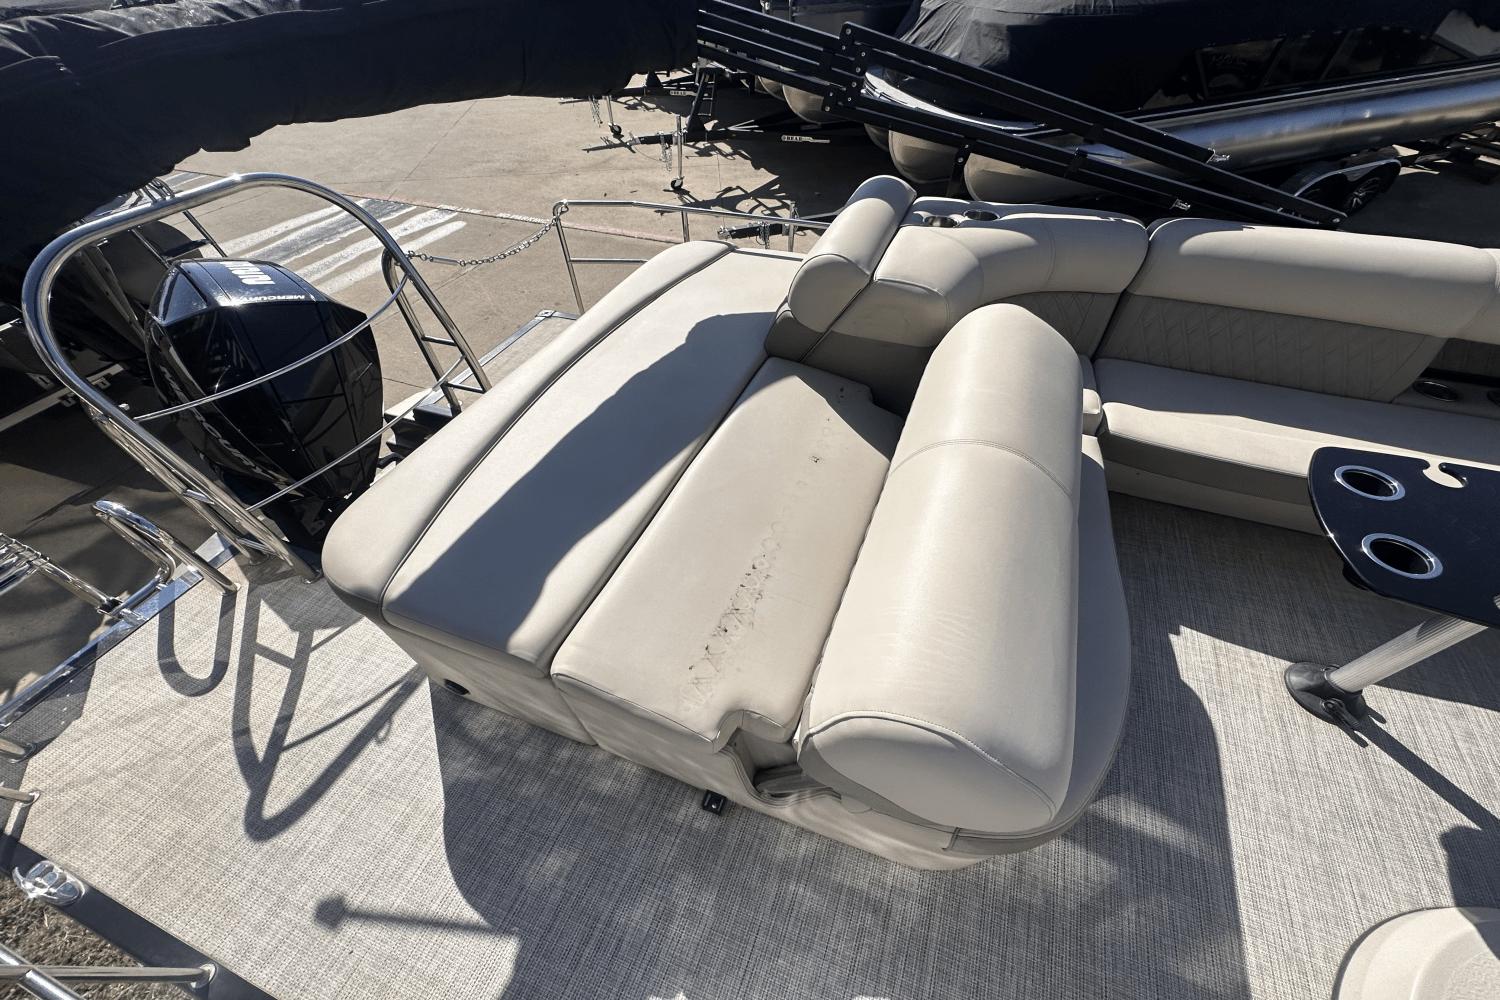 2020 Harris Sunliner 250 Pontoon for sale - YachtWorld